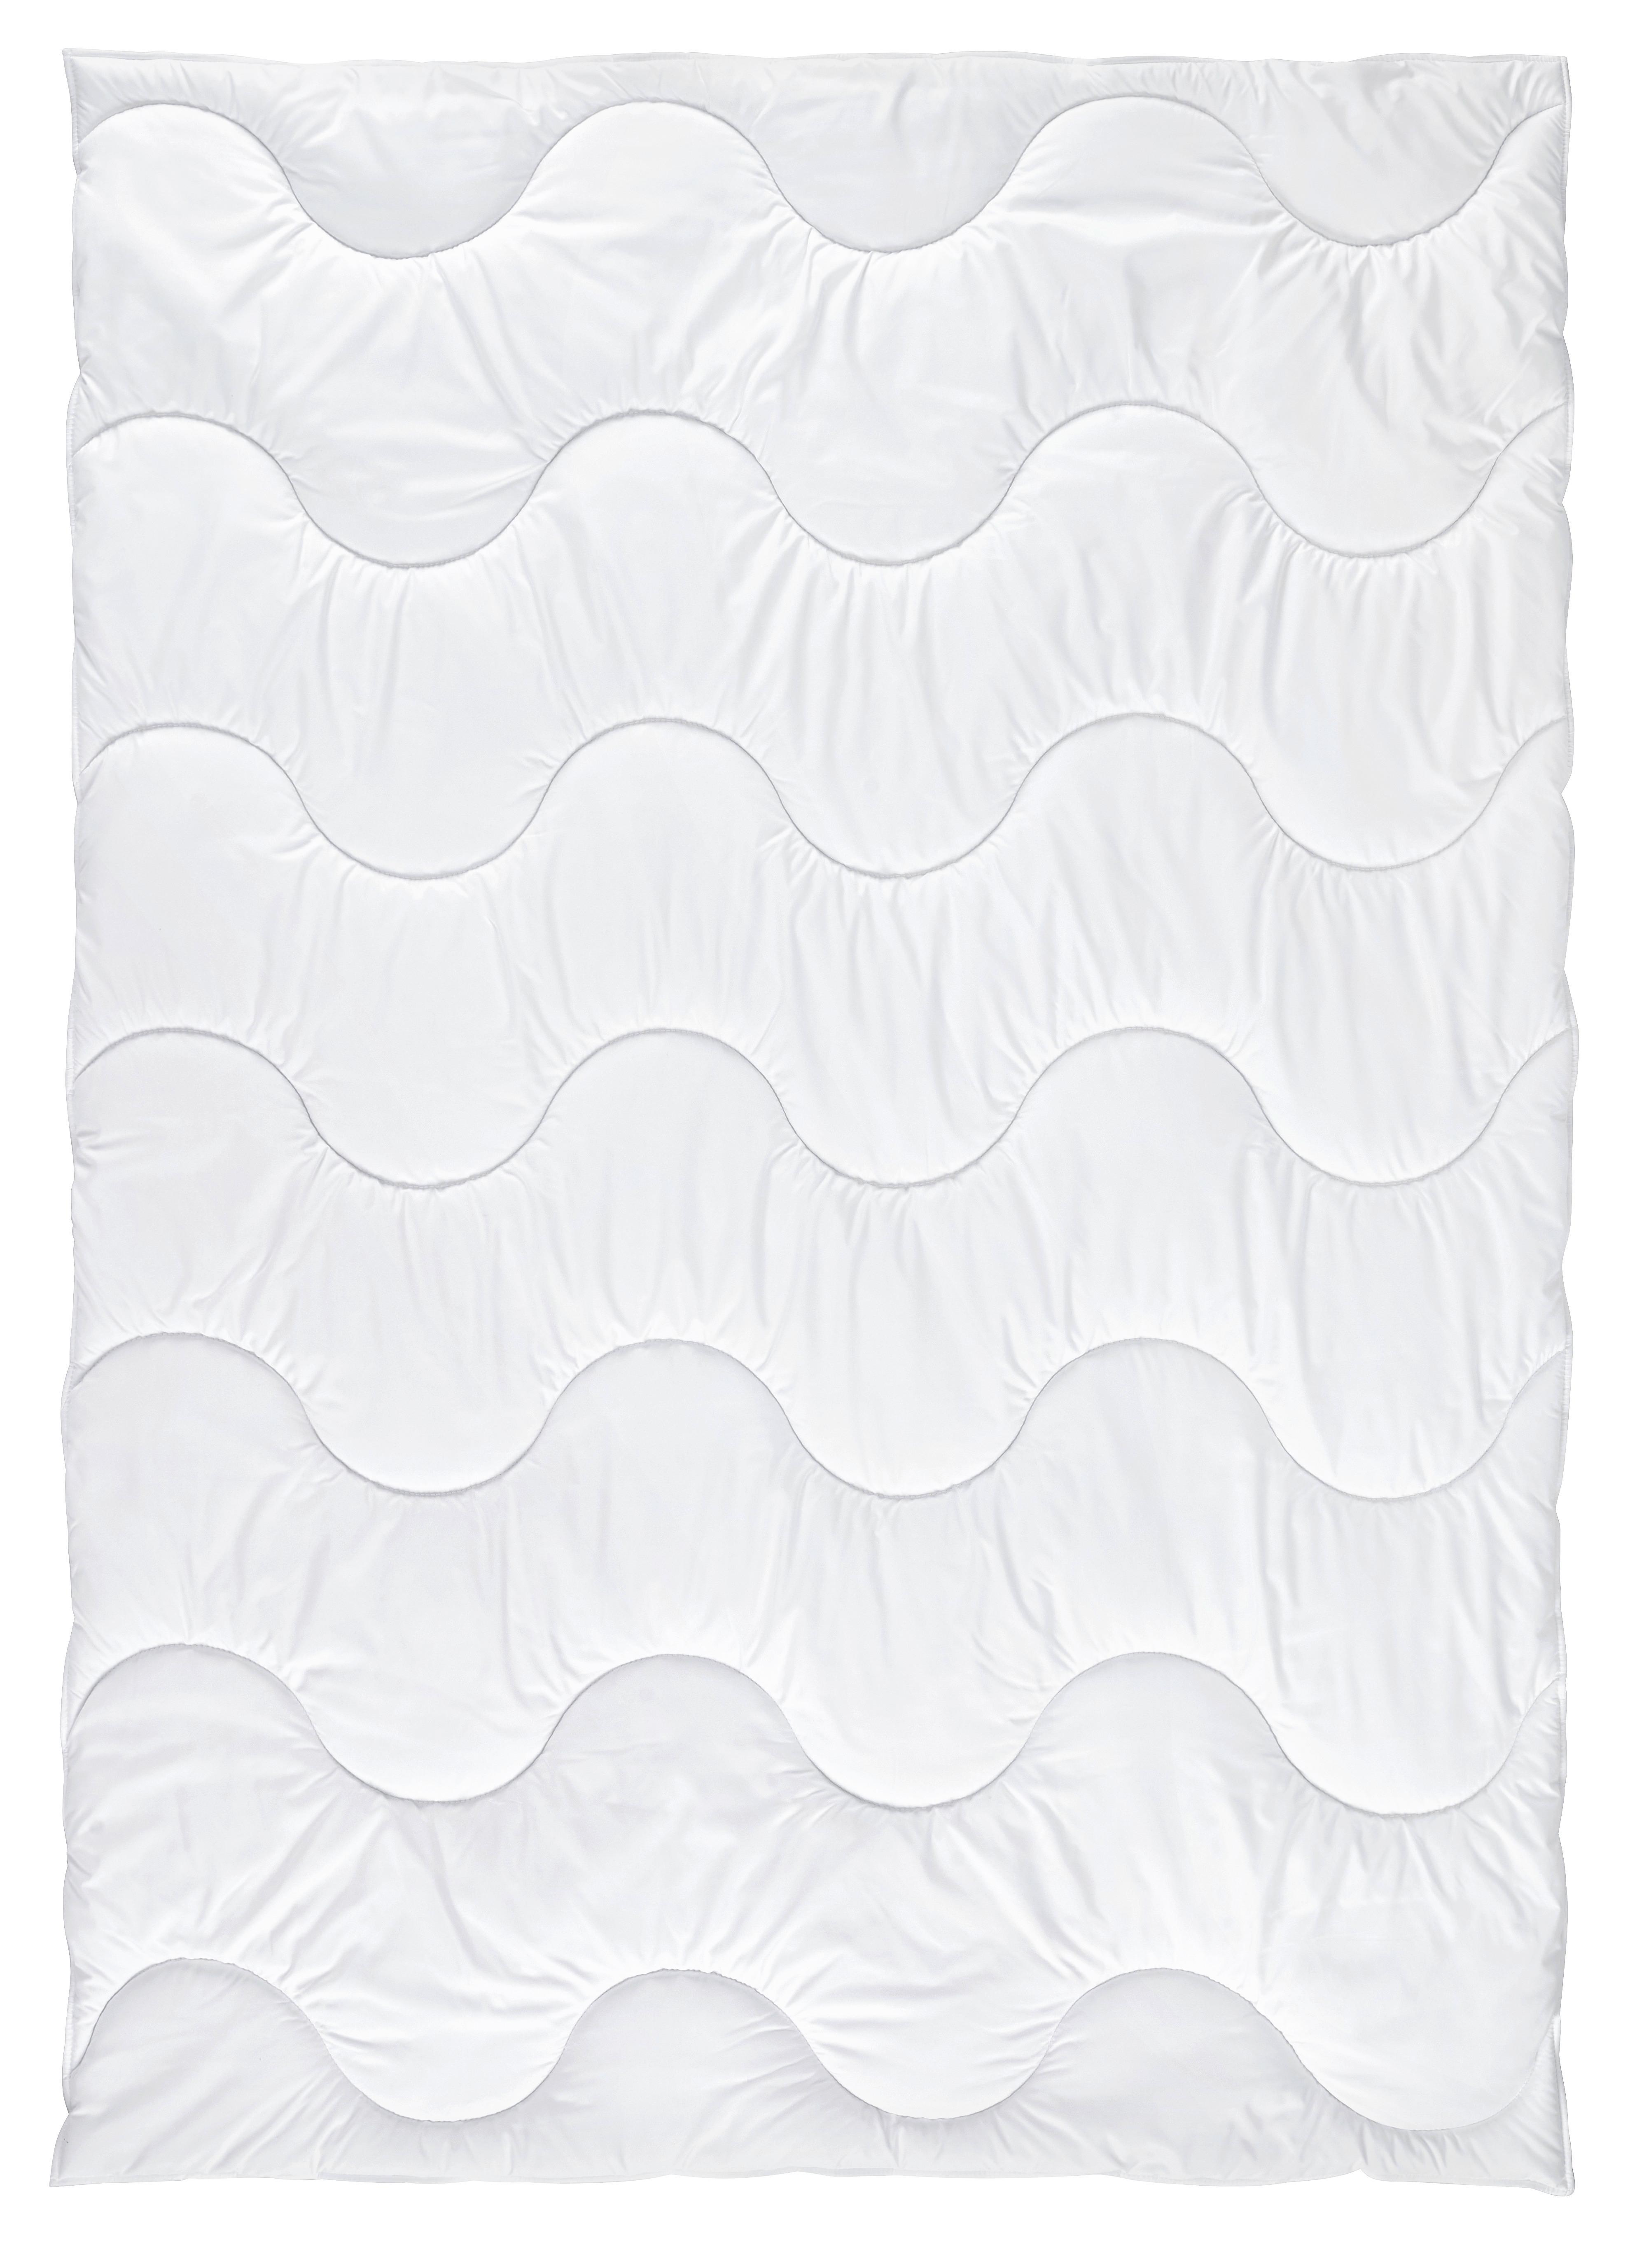 Zimná Prikrývka Zilly Warm, 135-140/200cm - biela, textil (135-140/200cm) - Nadana